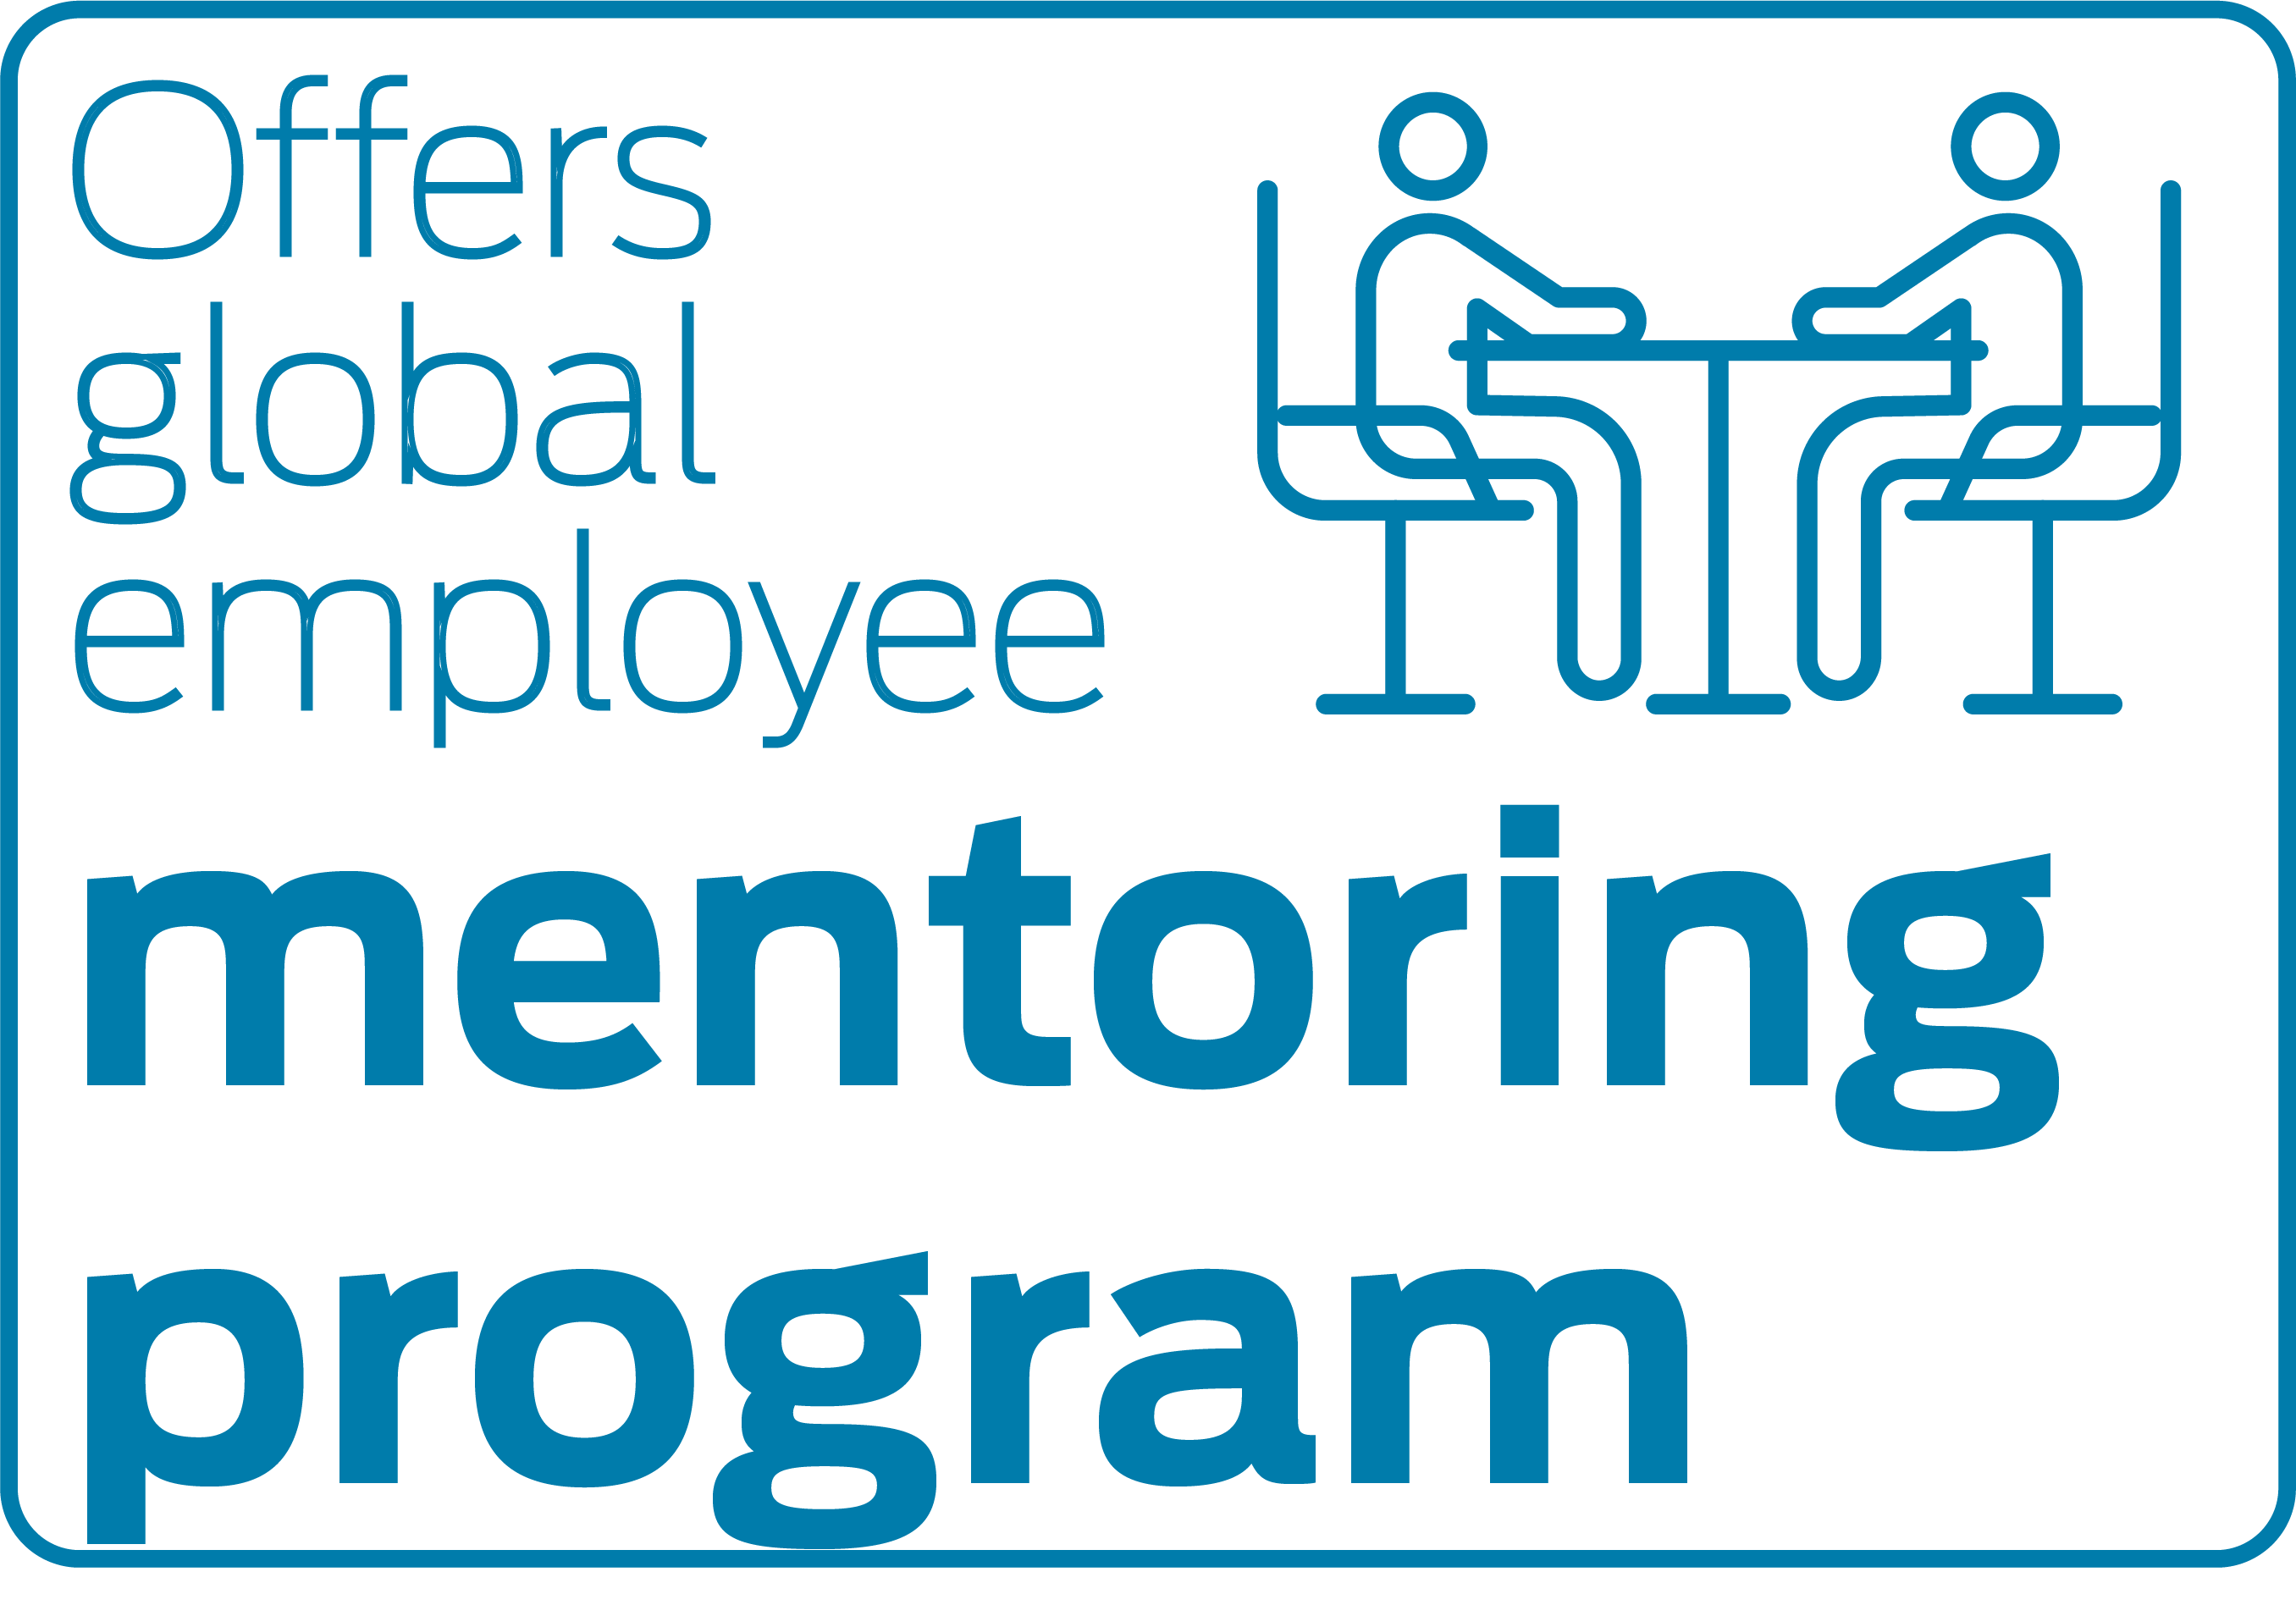 Offers global employee mentoring program